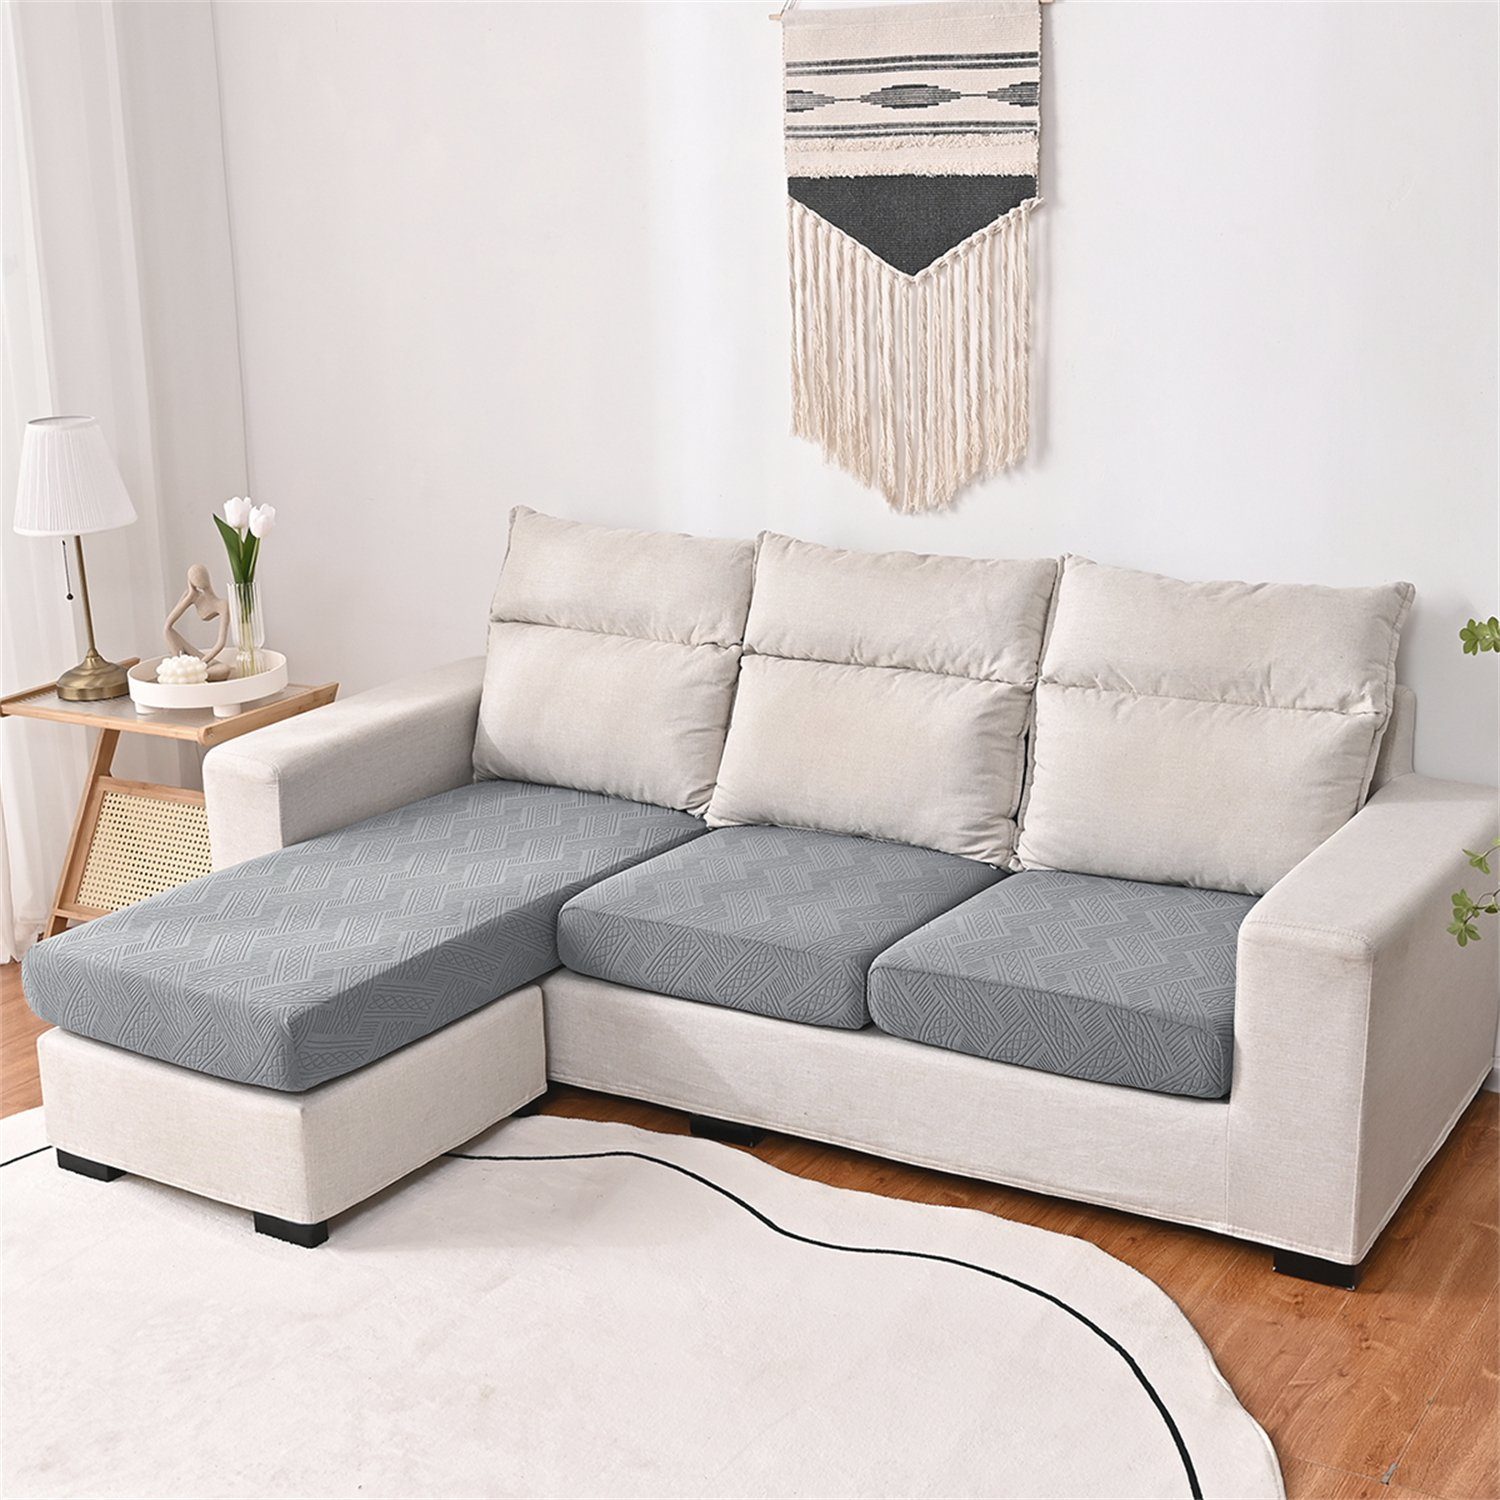 Sofahusse, HOMEIDEAS, Sofa Bezüge 1,2,3,4 Sitze Grau-Geometrie Couch Kissenbezüge für